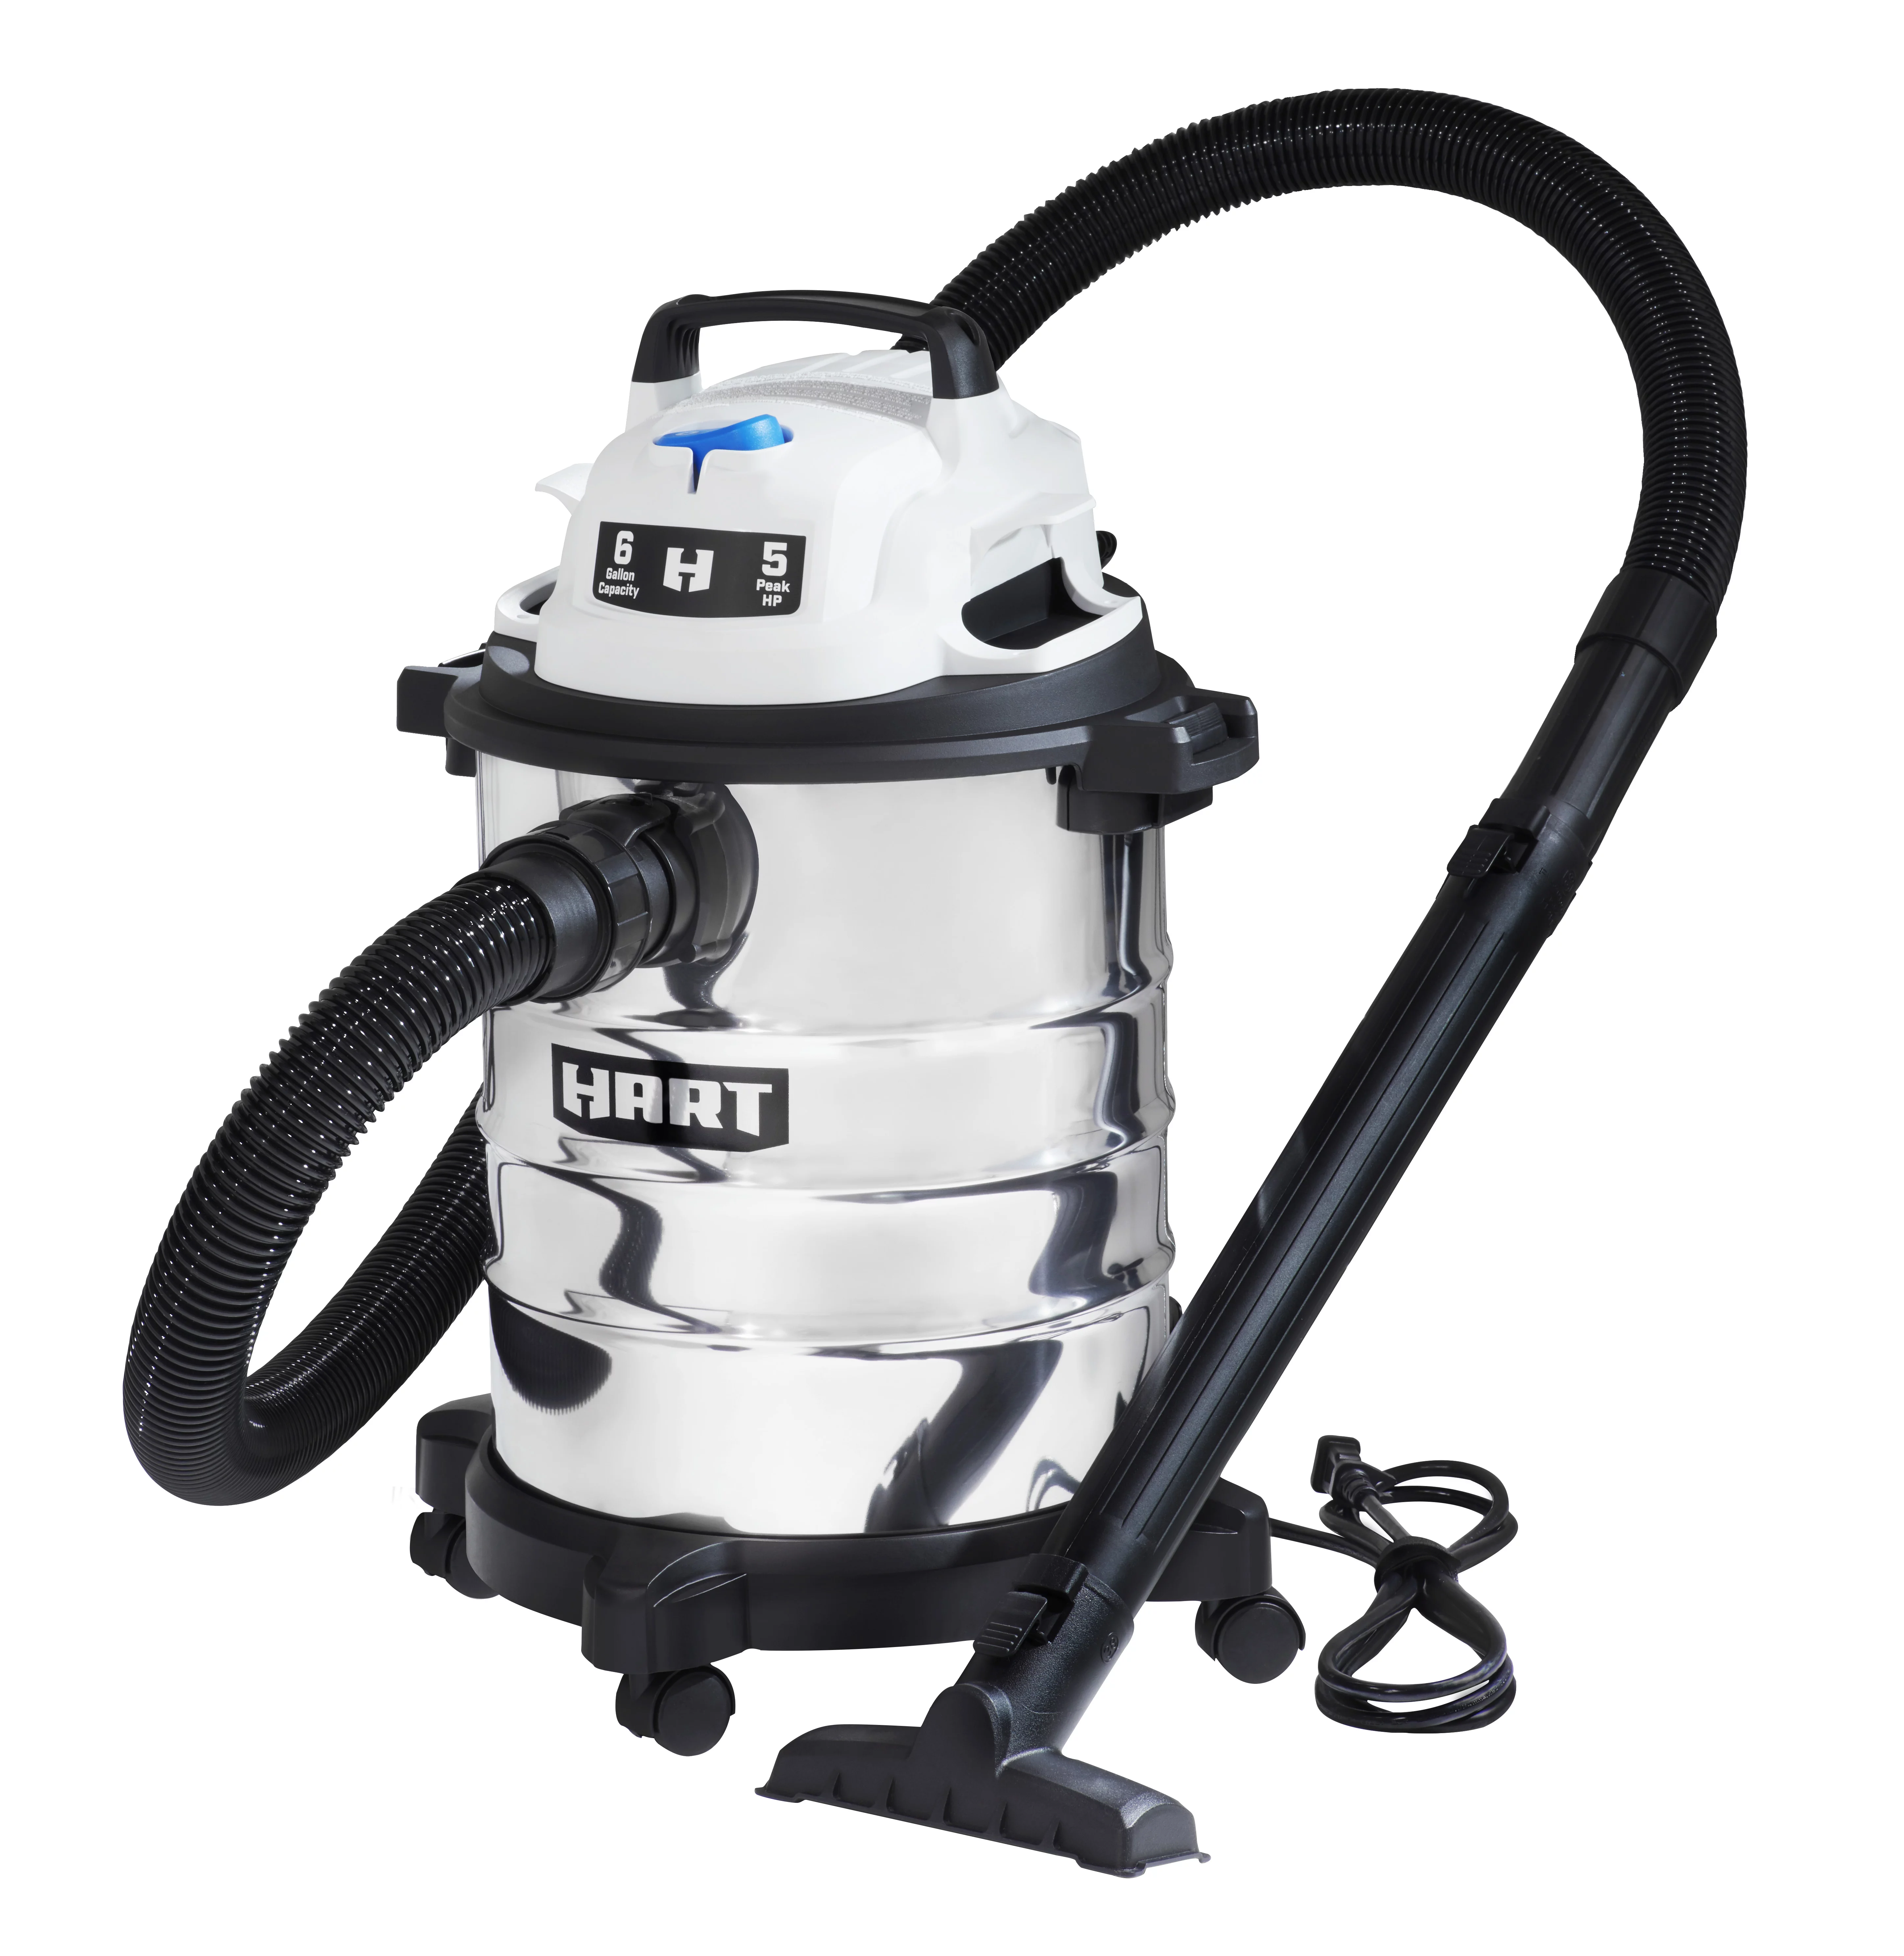 HART 6 Gallon 5 Peak HP Stainless Steel Wet/Dry Vacuum with Cartridge Filter, VOC608S 3702